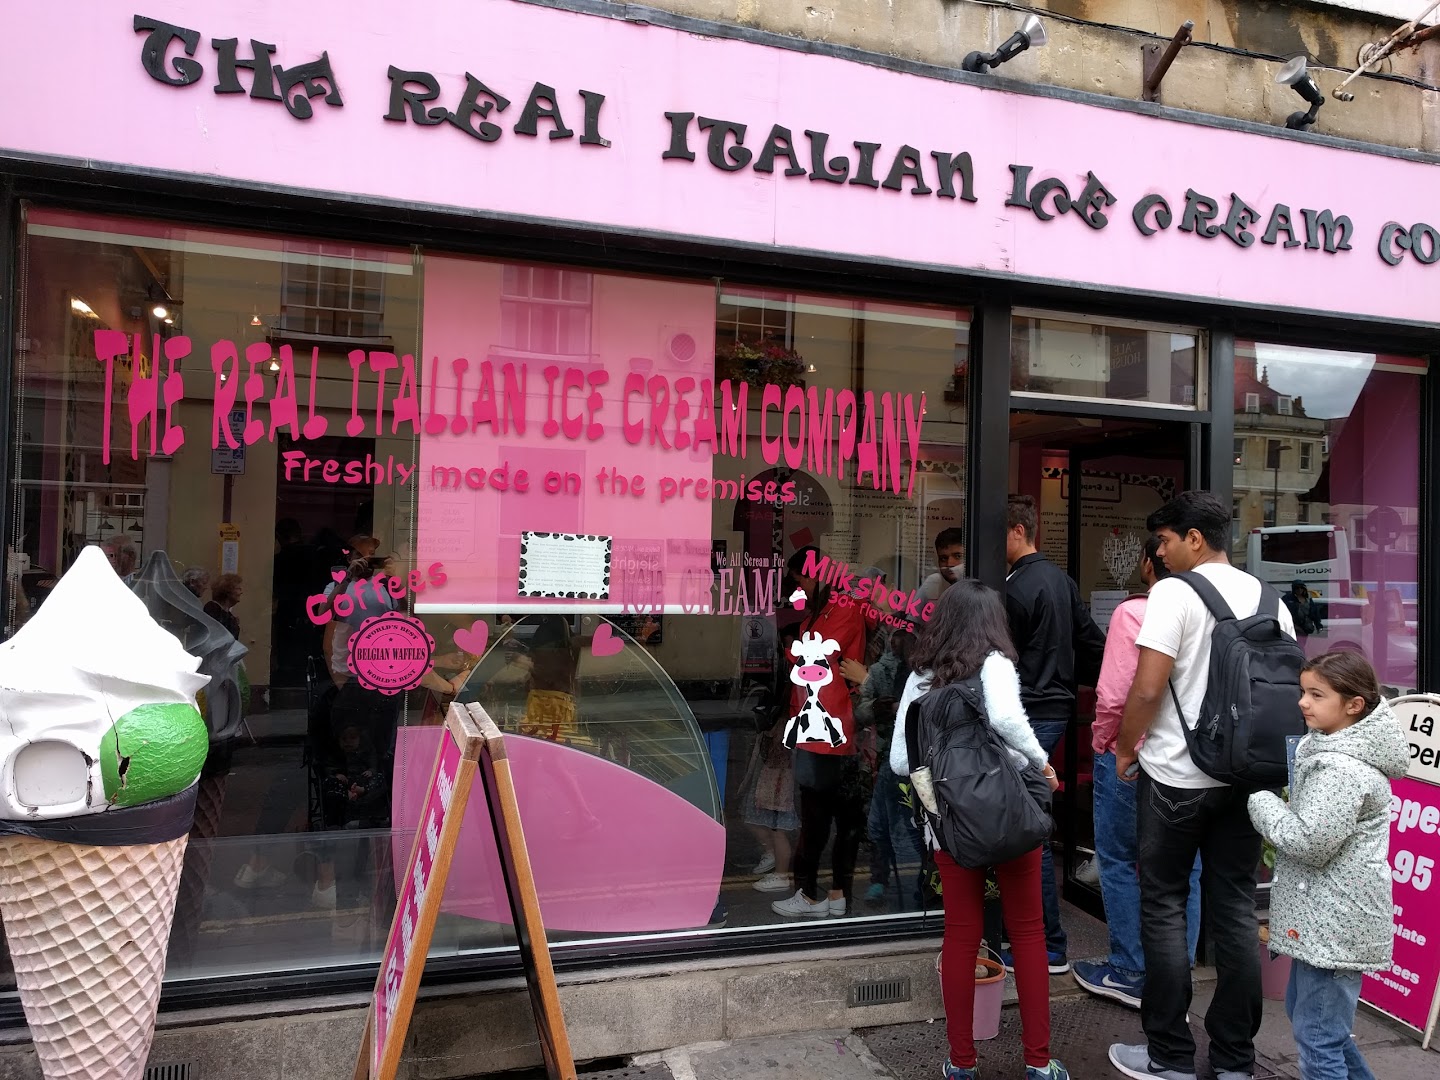 The Real Italian Ice Cream Co